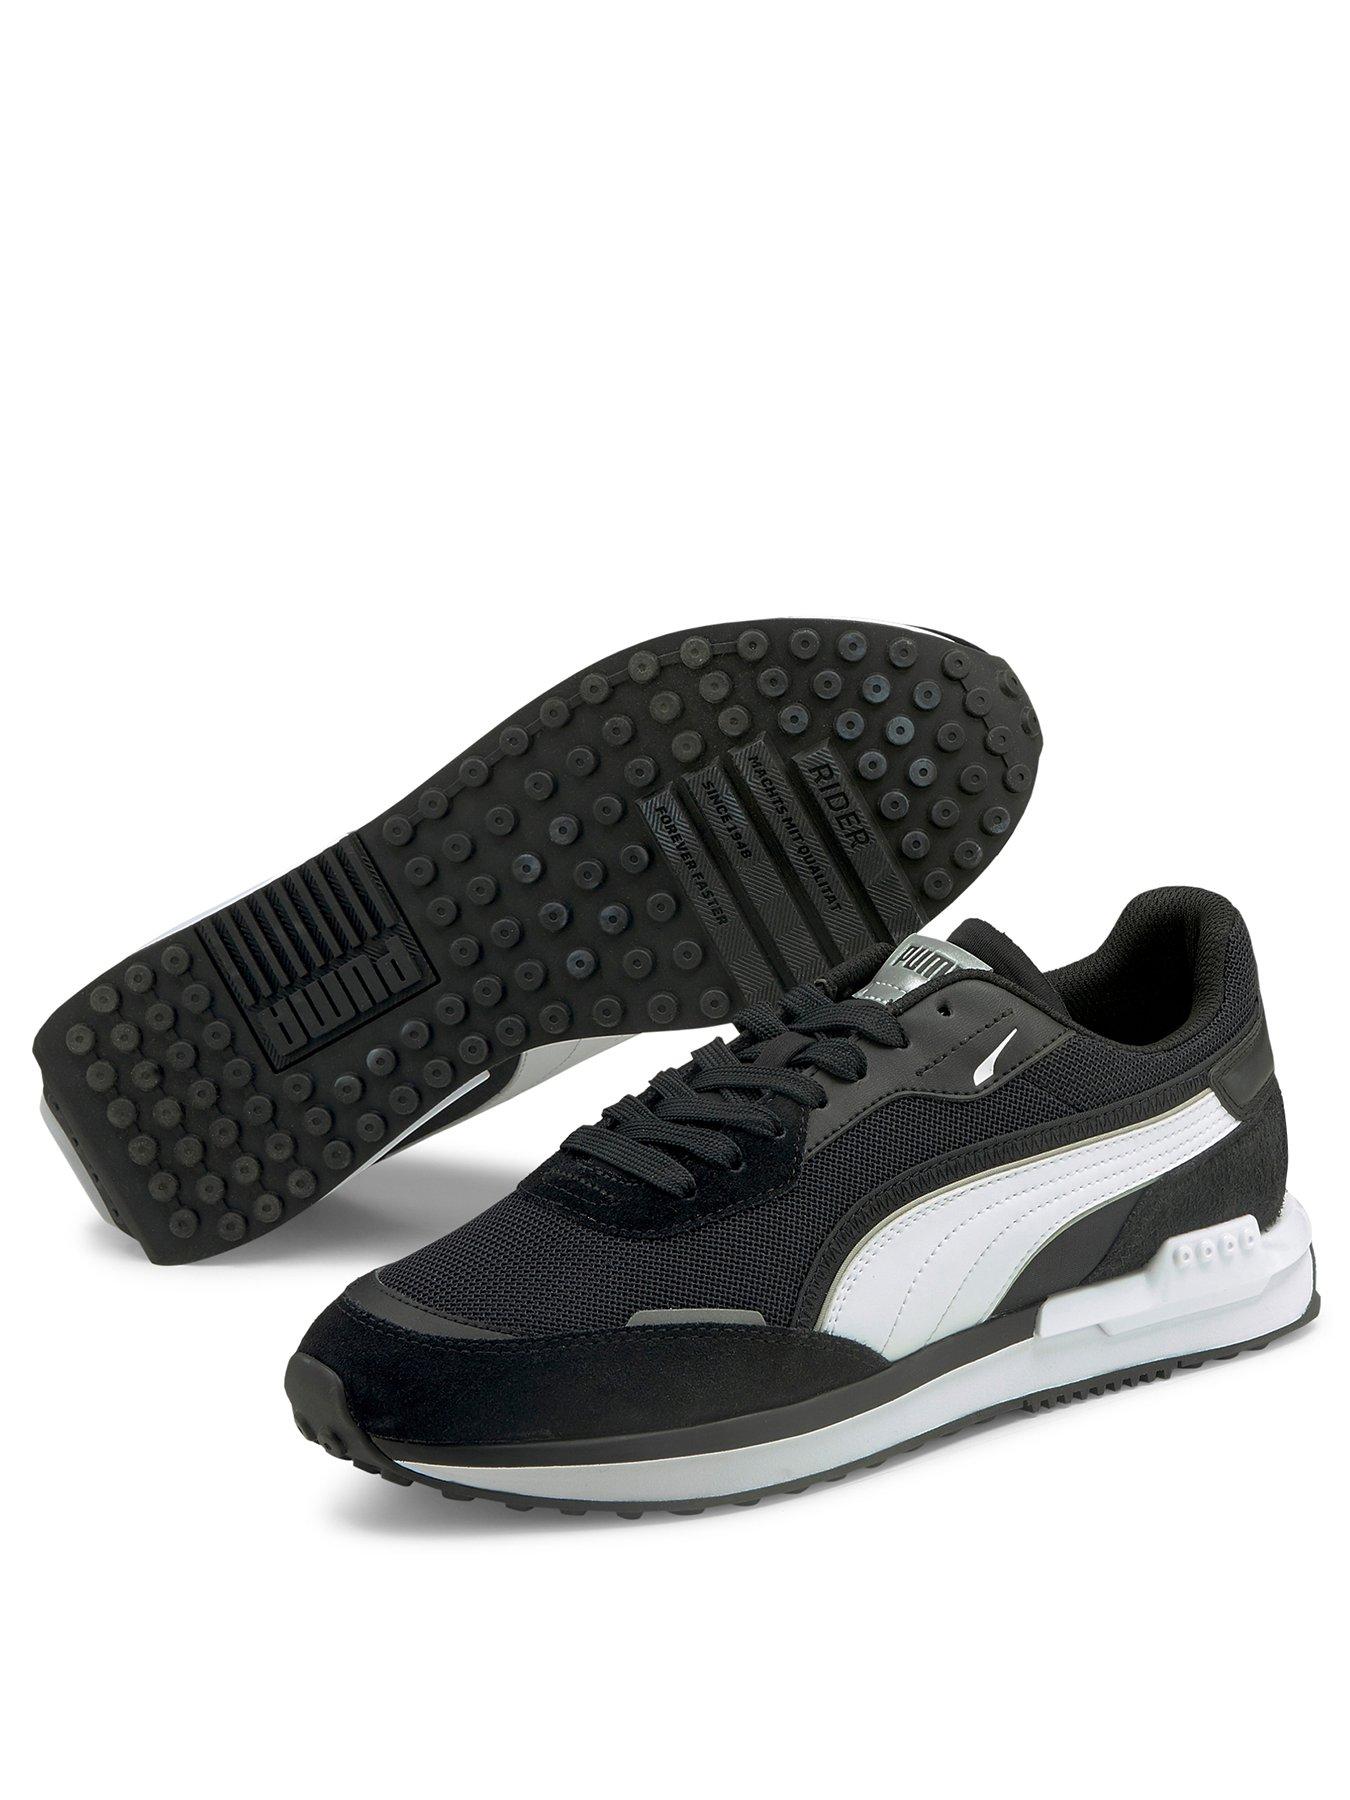 puma sneakers black